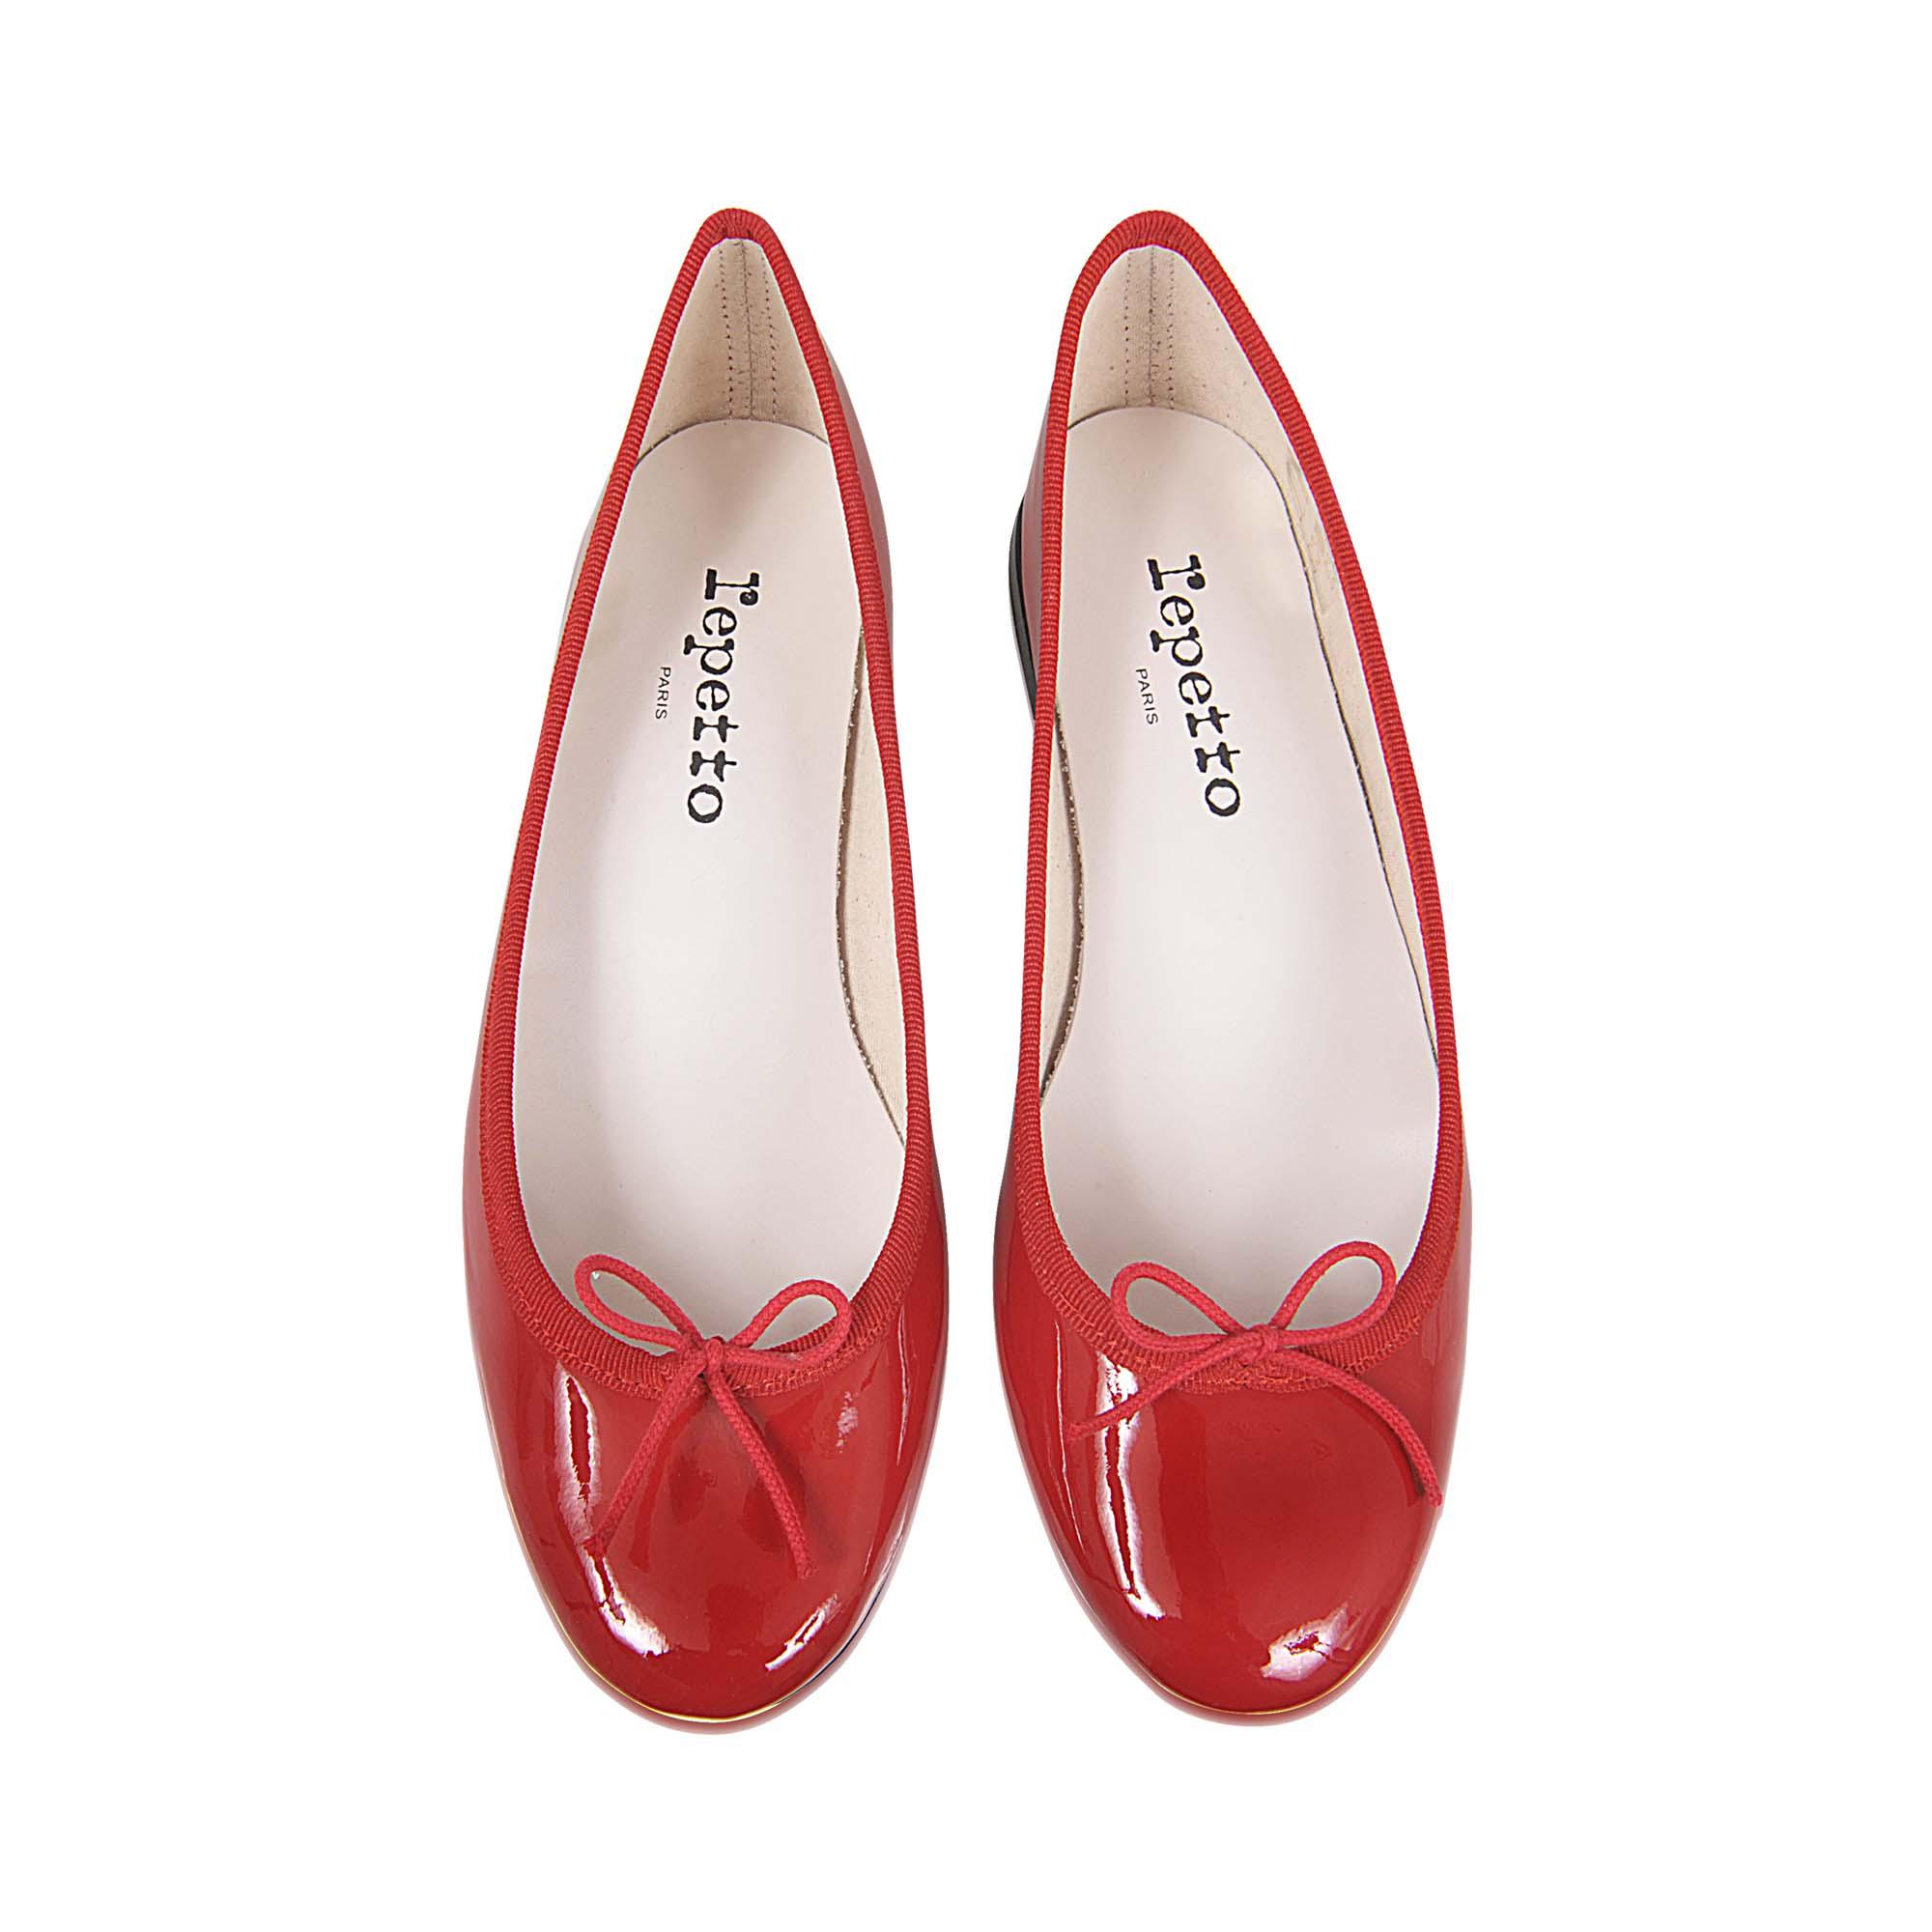 Lyst - Repetto Cendrillon Patent Ballet Flats in Red